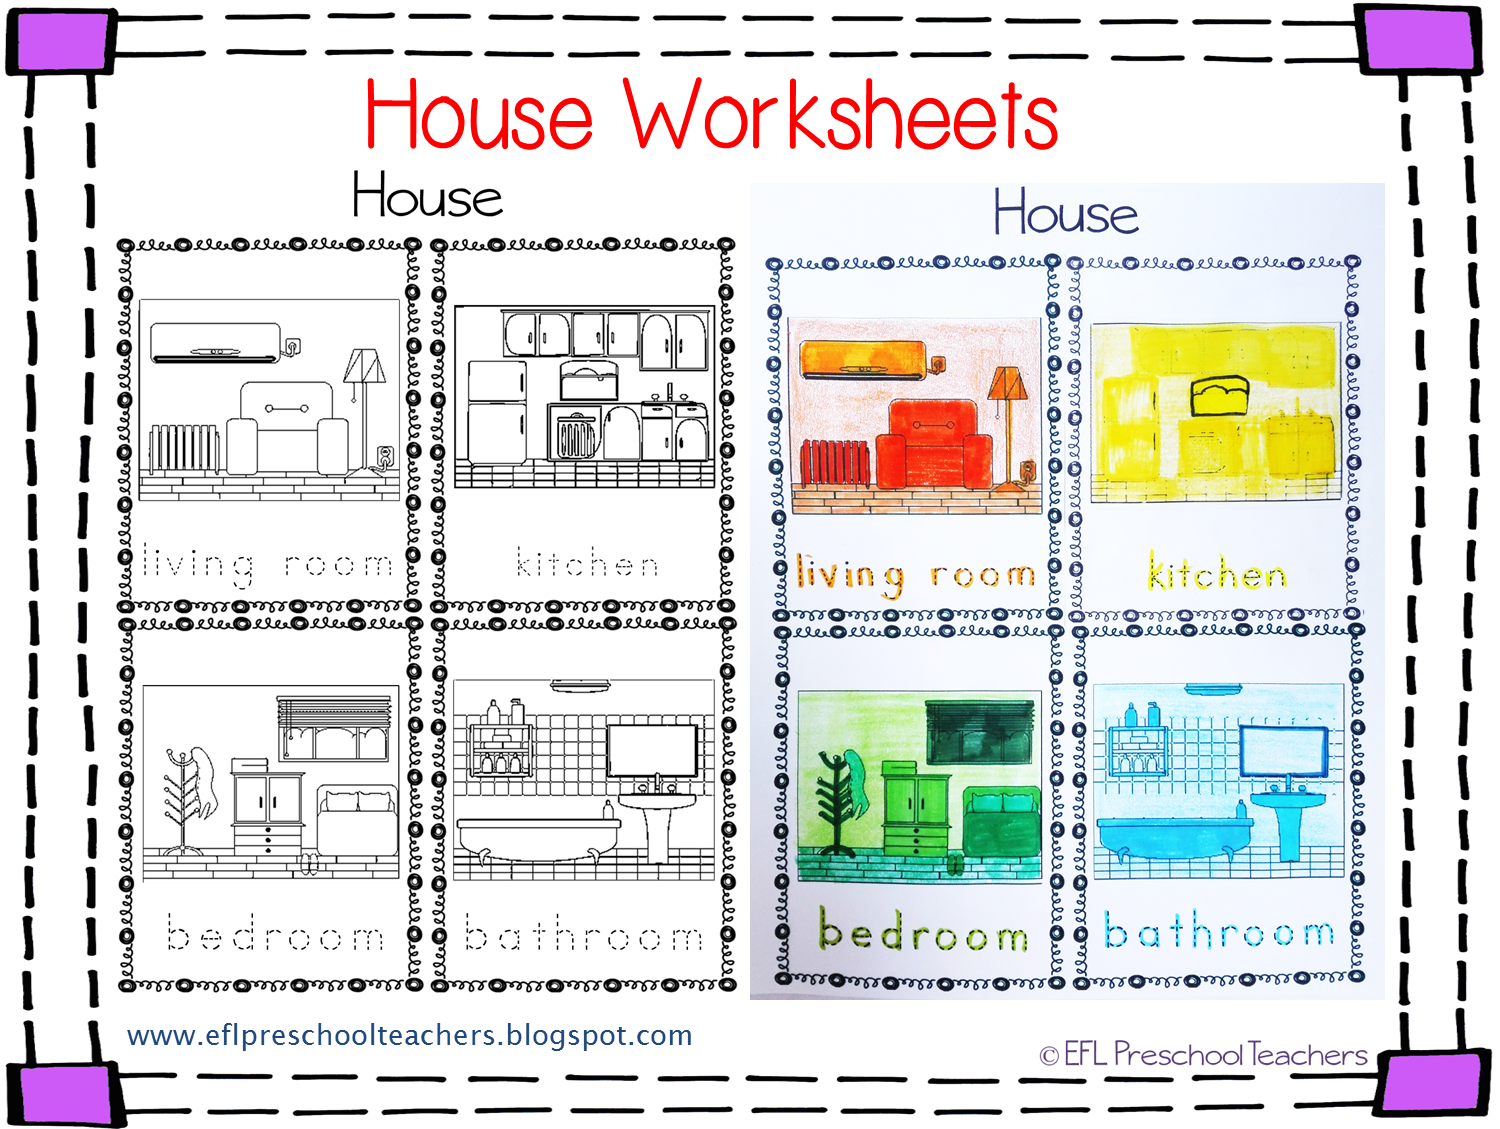 ESL/EFL Preschool Teachers: House Worksheets for the Preschool ELL